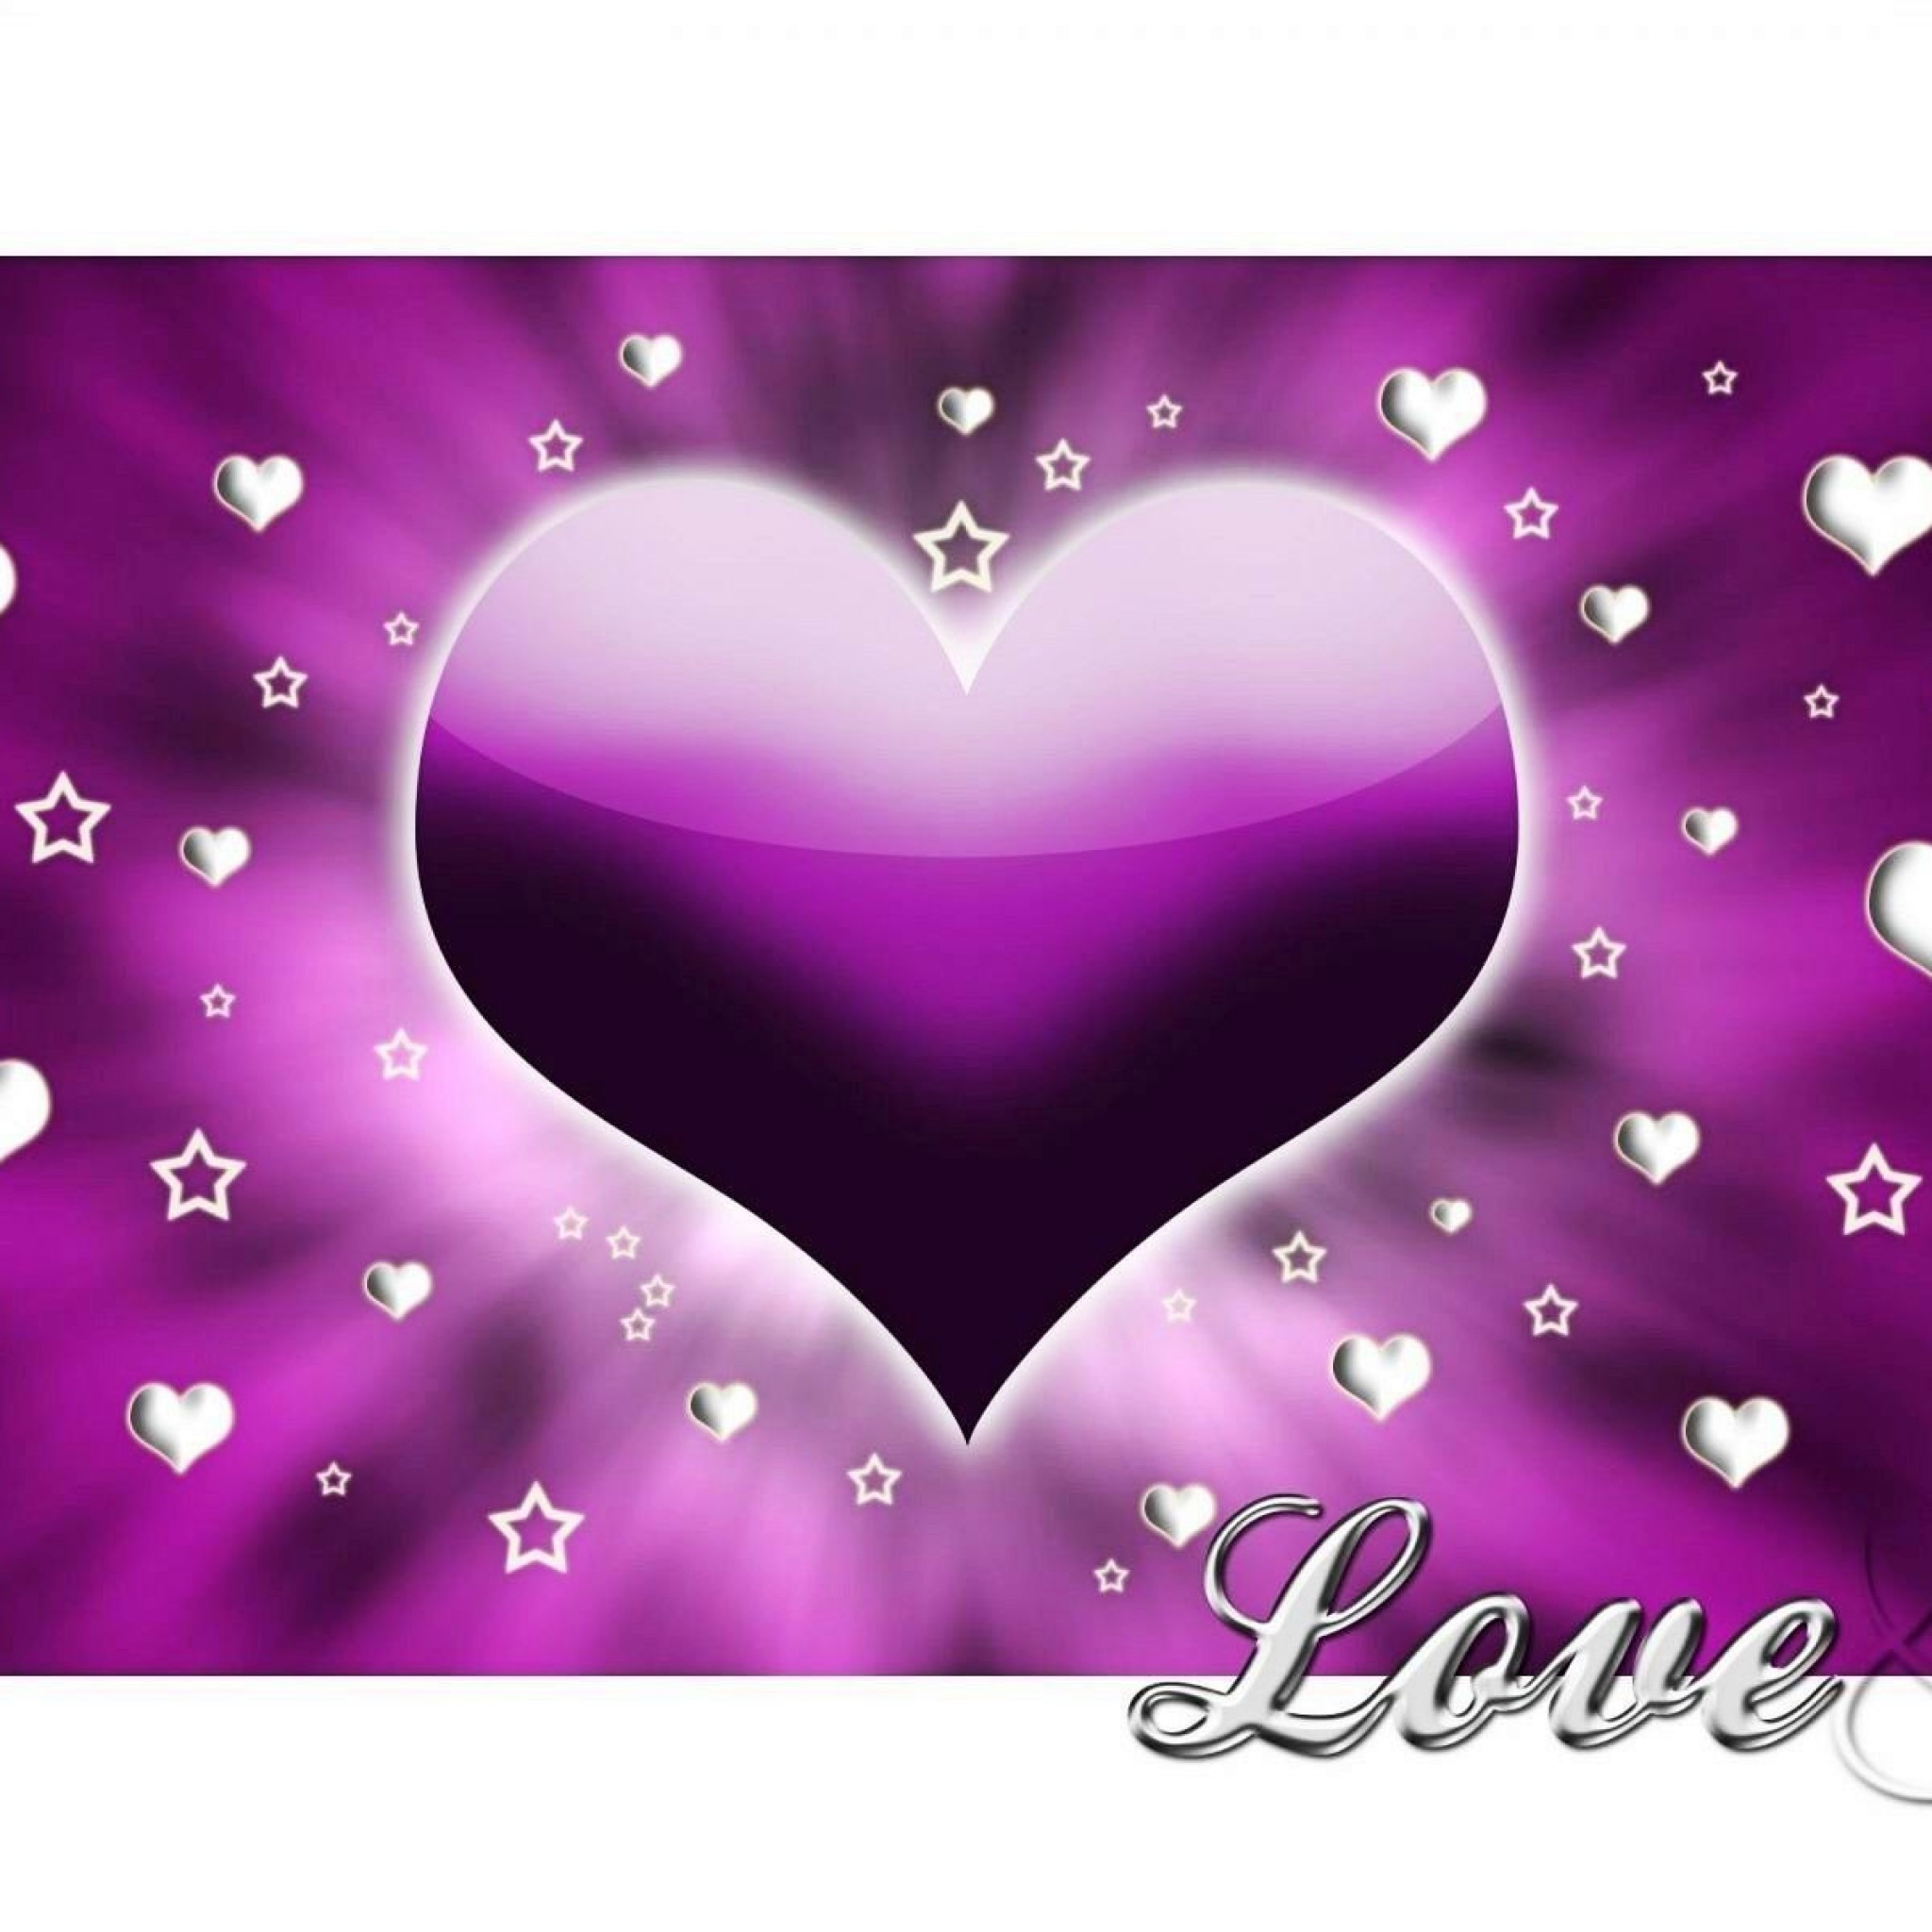 2048x2048 heart purple white love image wallpaper Wallpaper